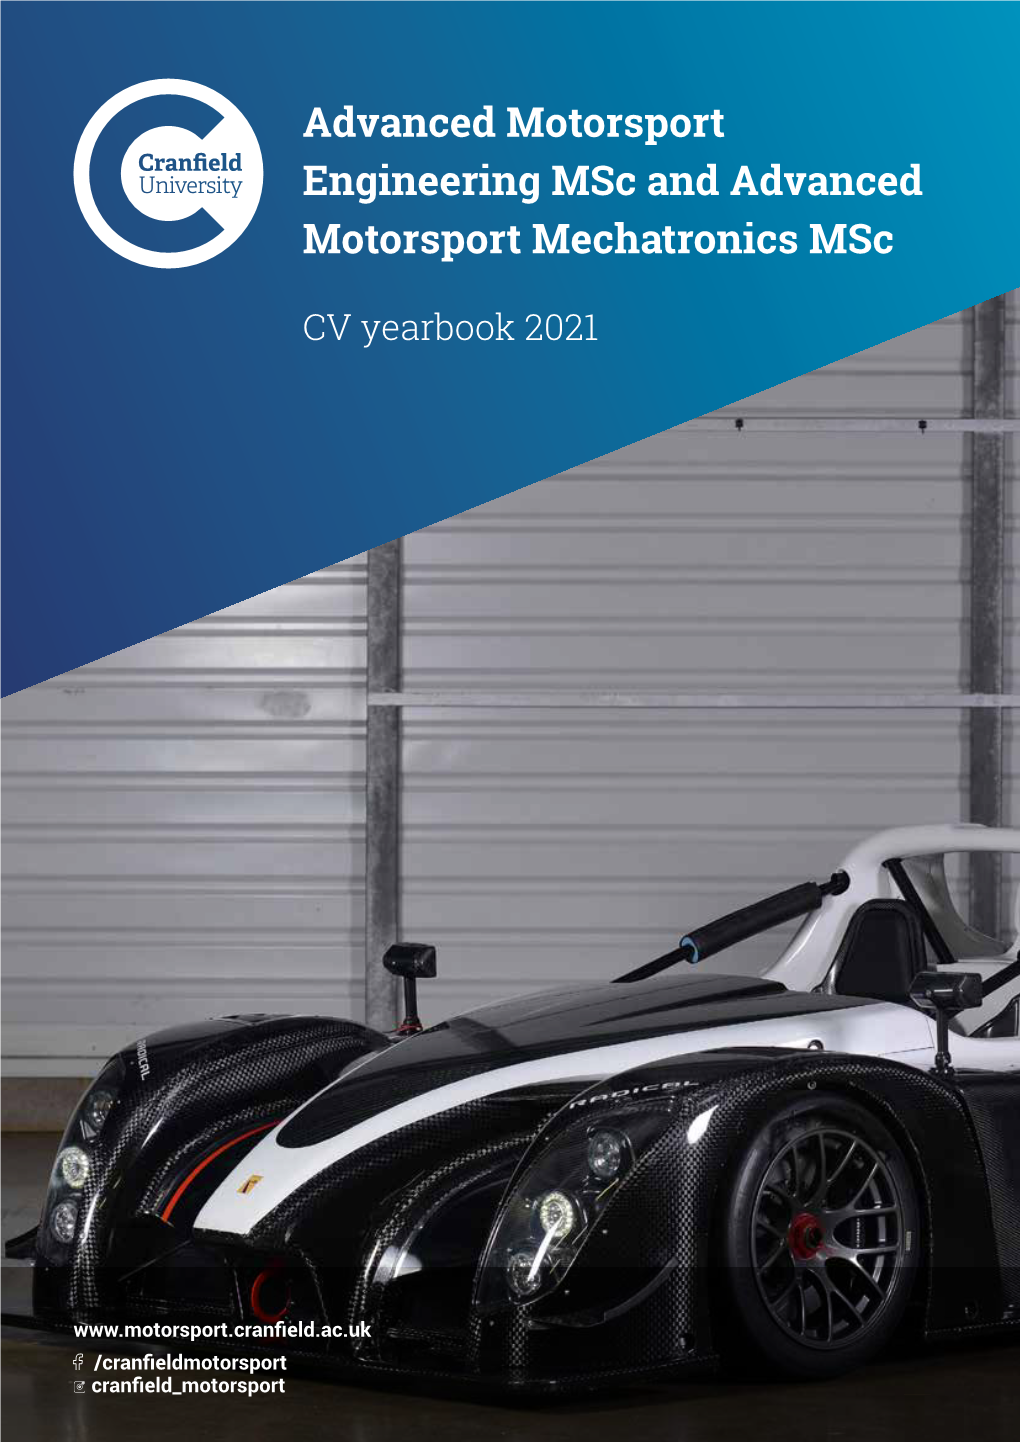 Advanced Motorsport Engineering Msc and Advanced Motorsport Mechatronics Msc